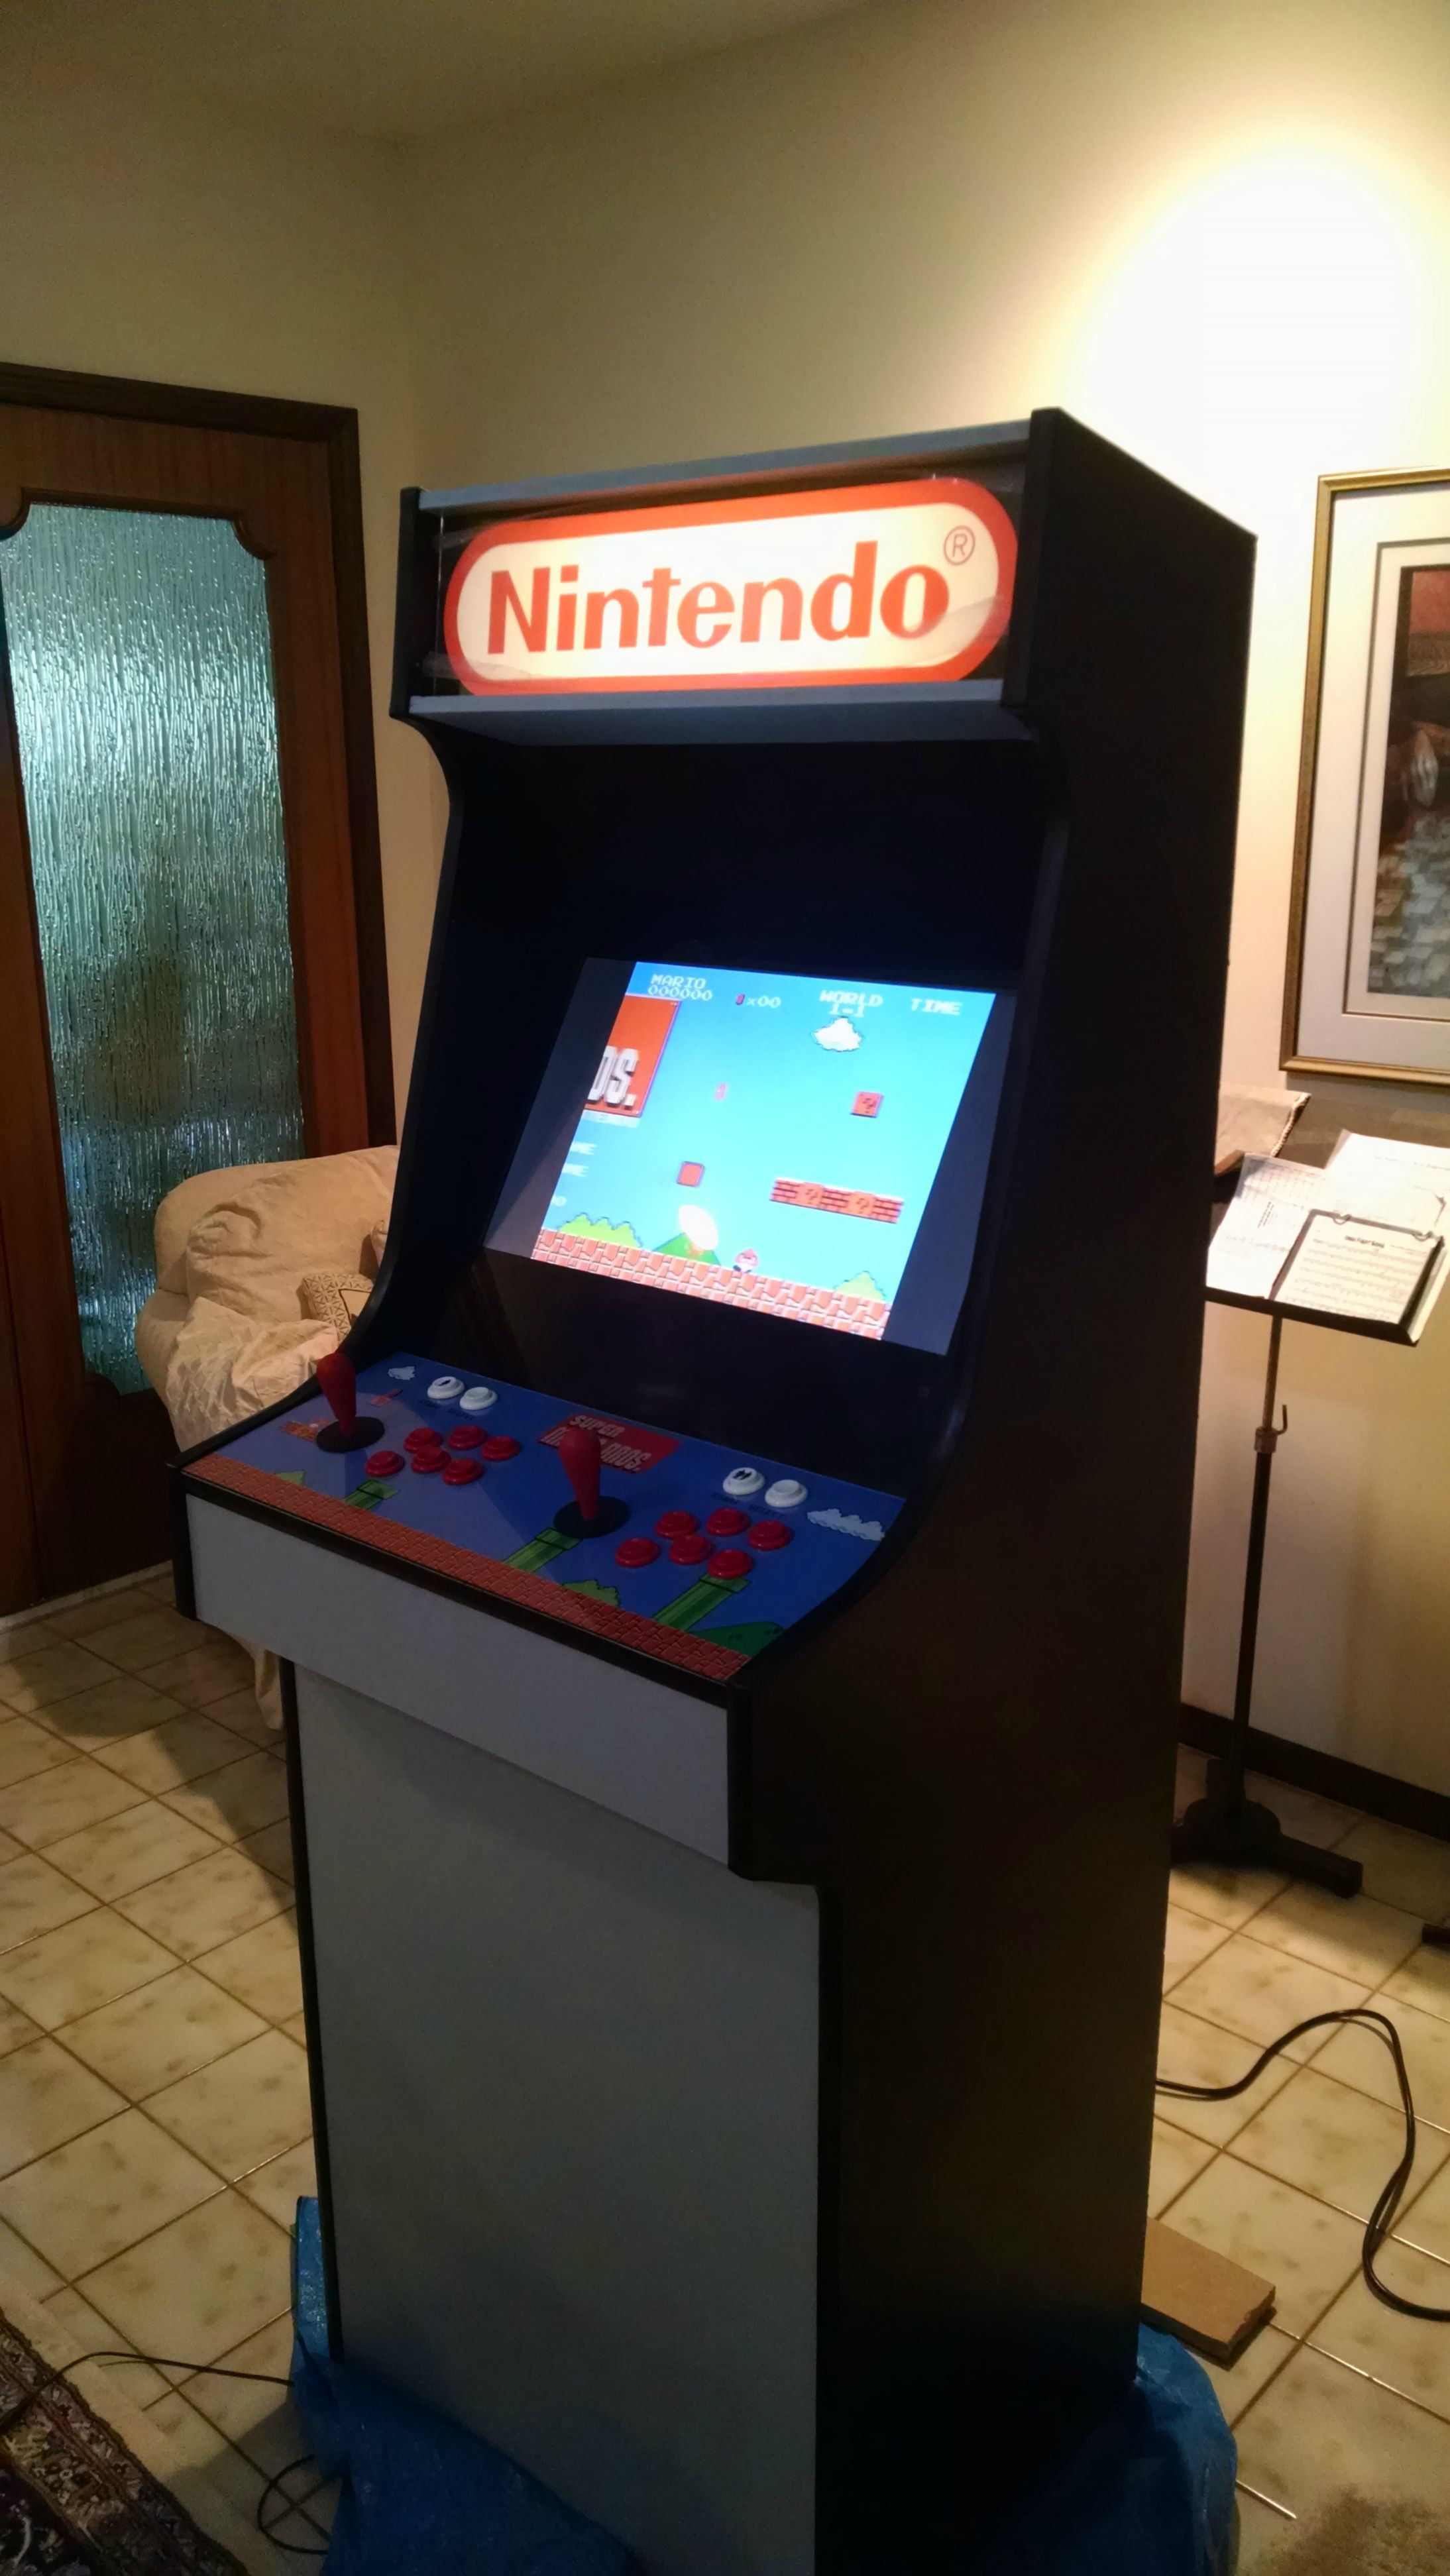 Best ideas about DIY Arcade Cabinet
. Save or Pin DIY Mario Themed RetroPie Arcade Now.